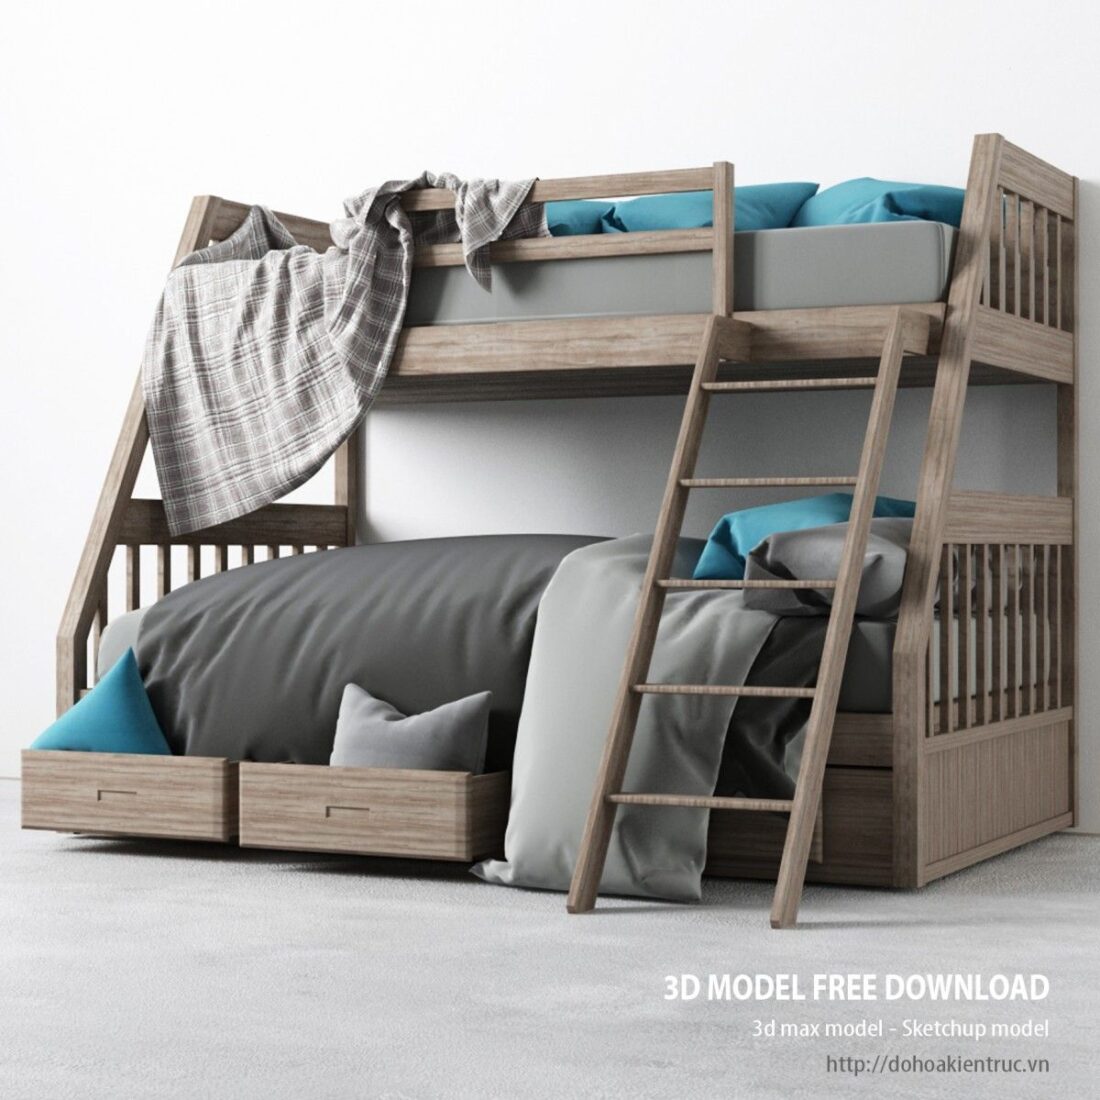 3d Model Child Bed 1 Free Download